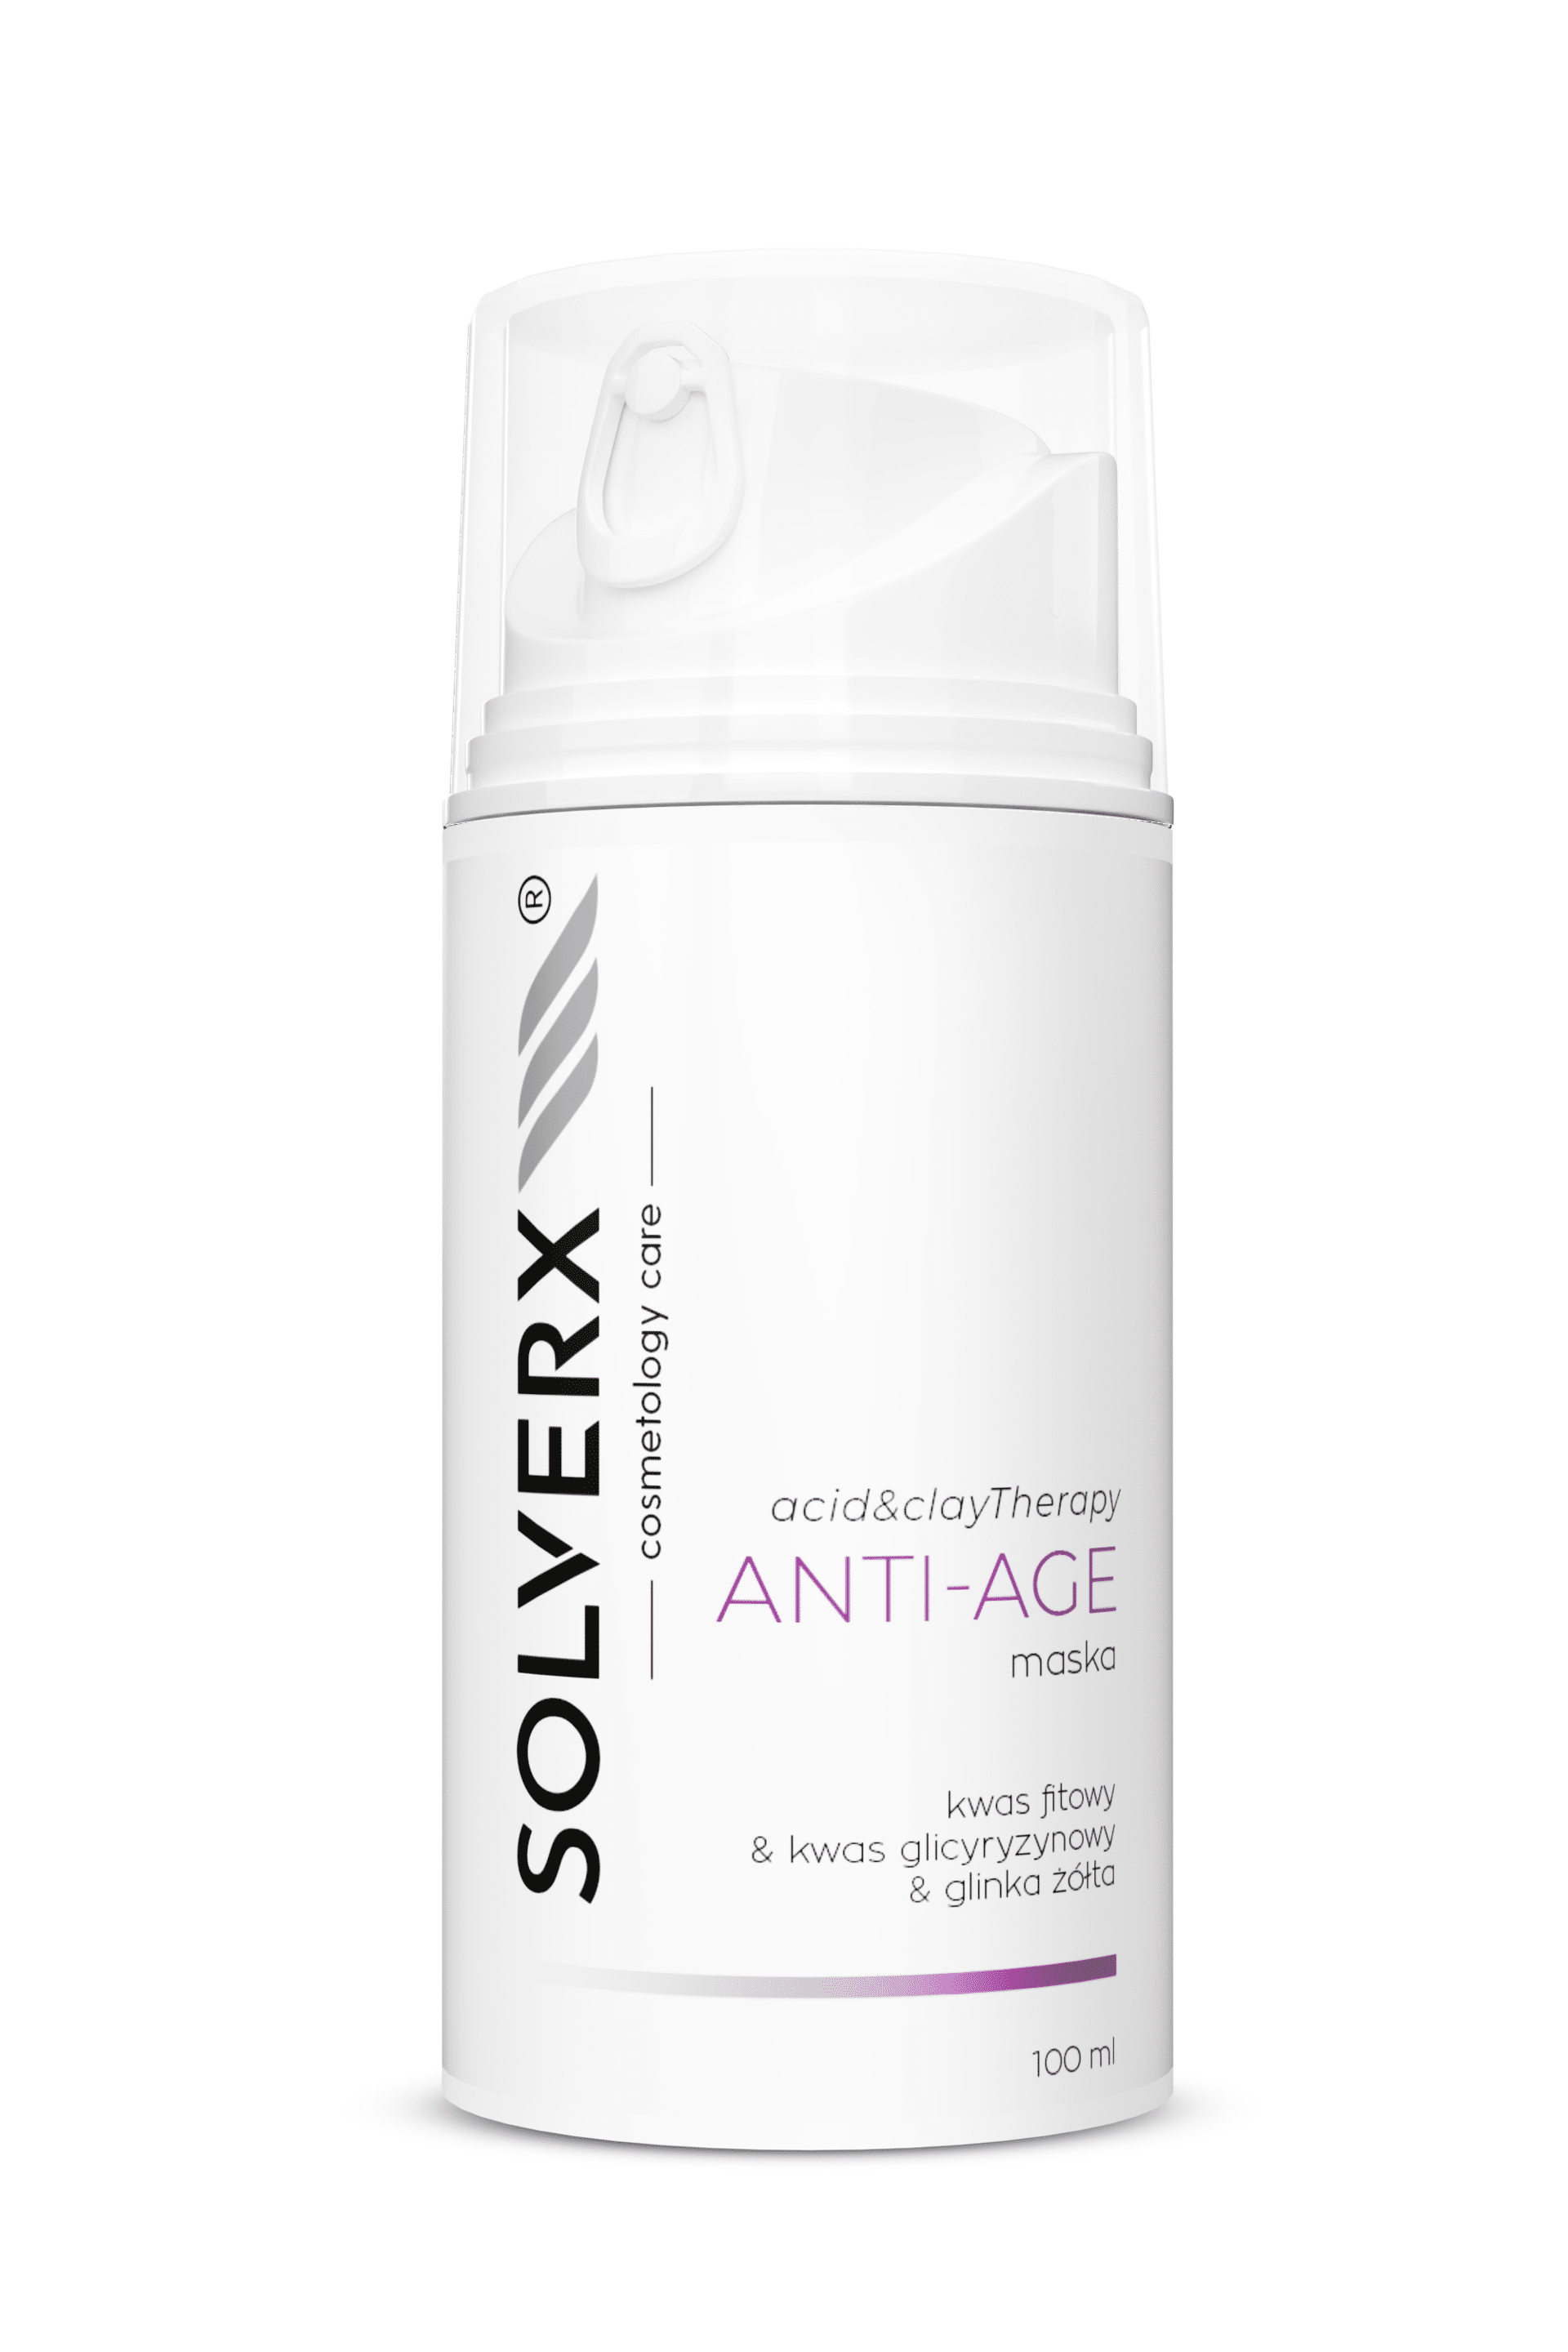 Solverx Acid & Clay Therapy maska ANTI AGE 100ml